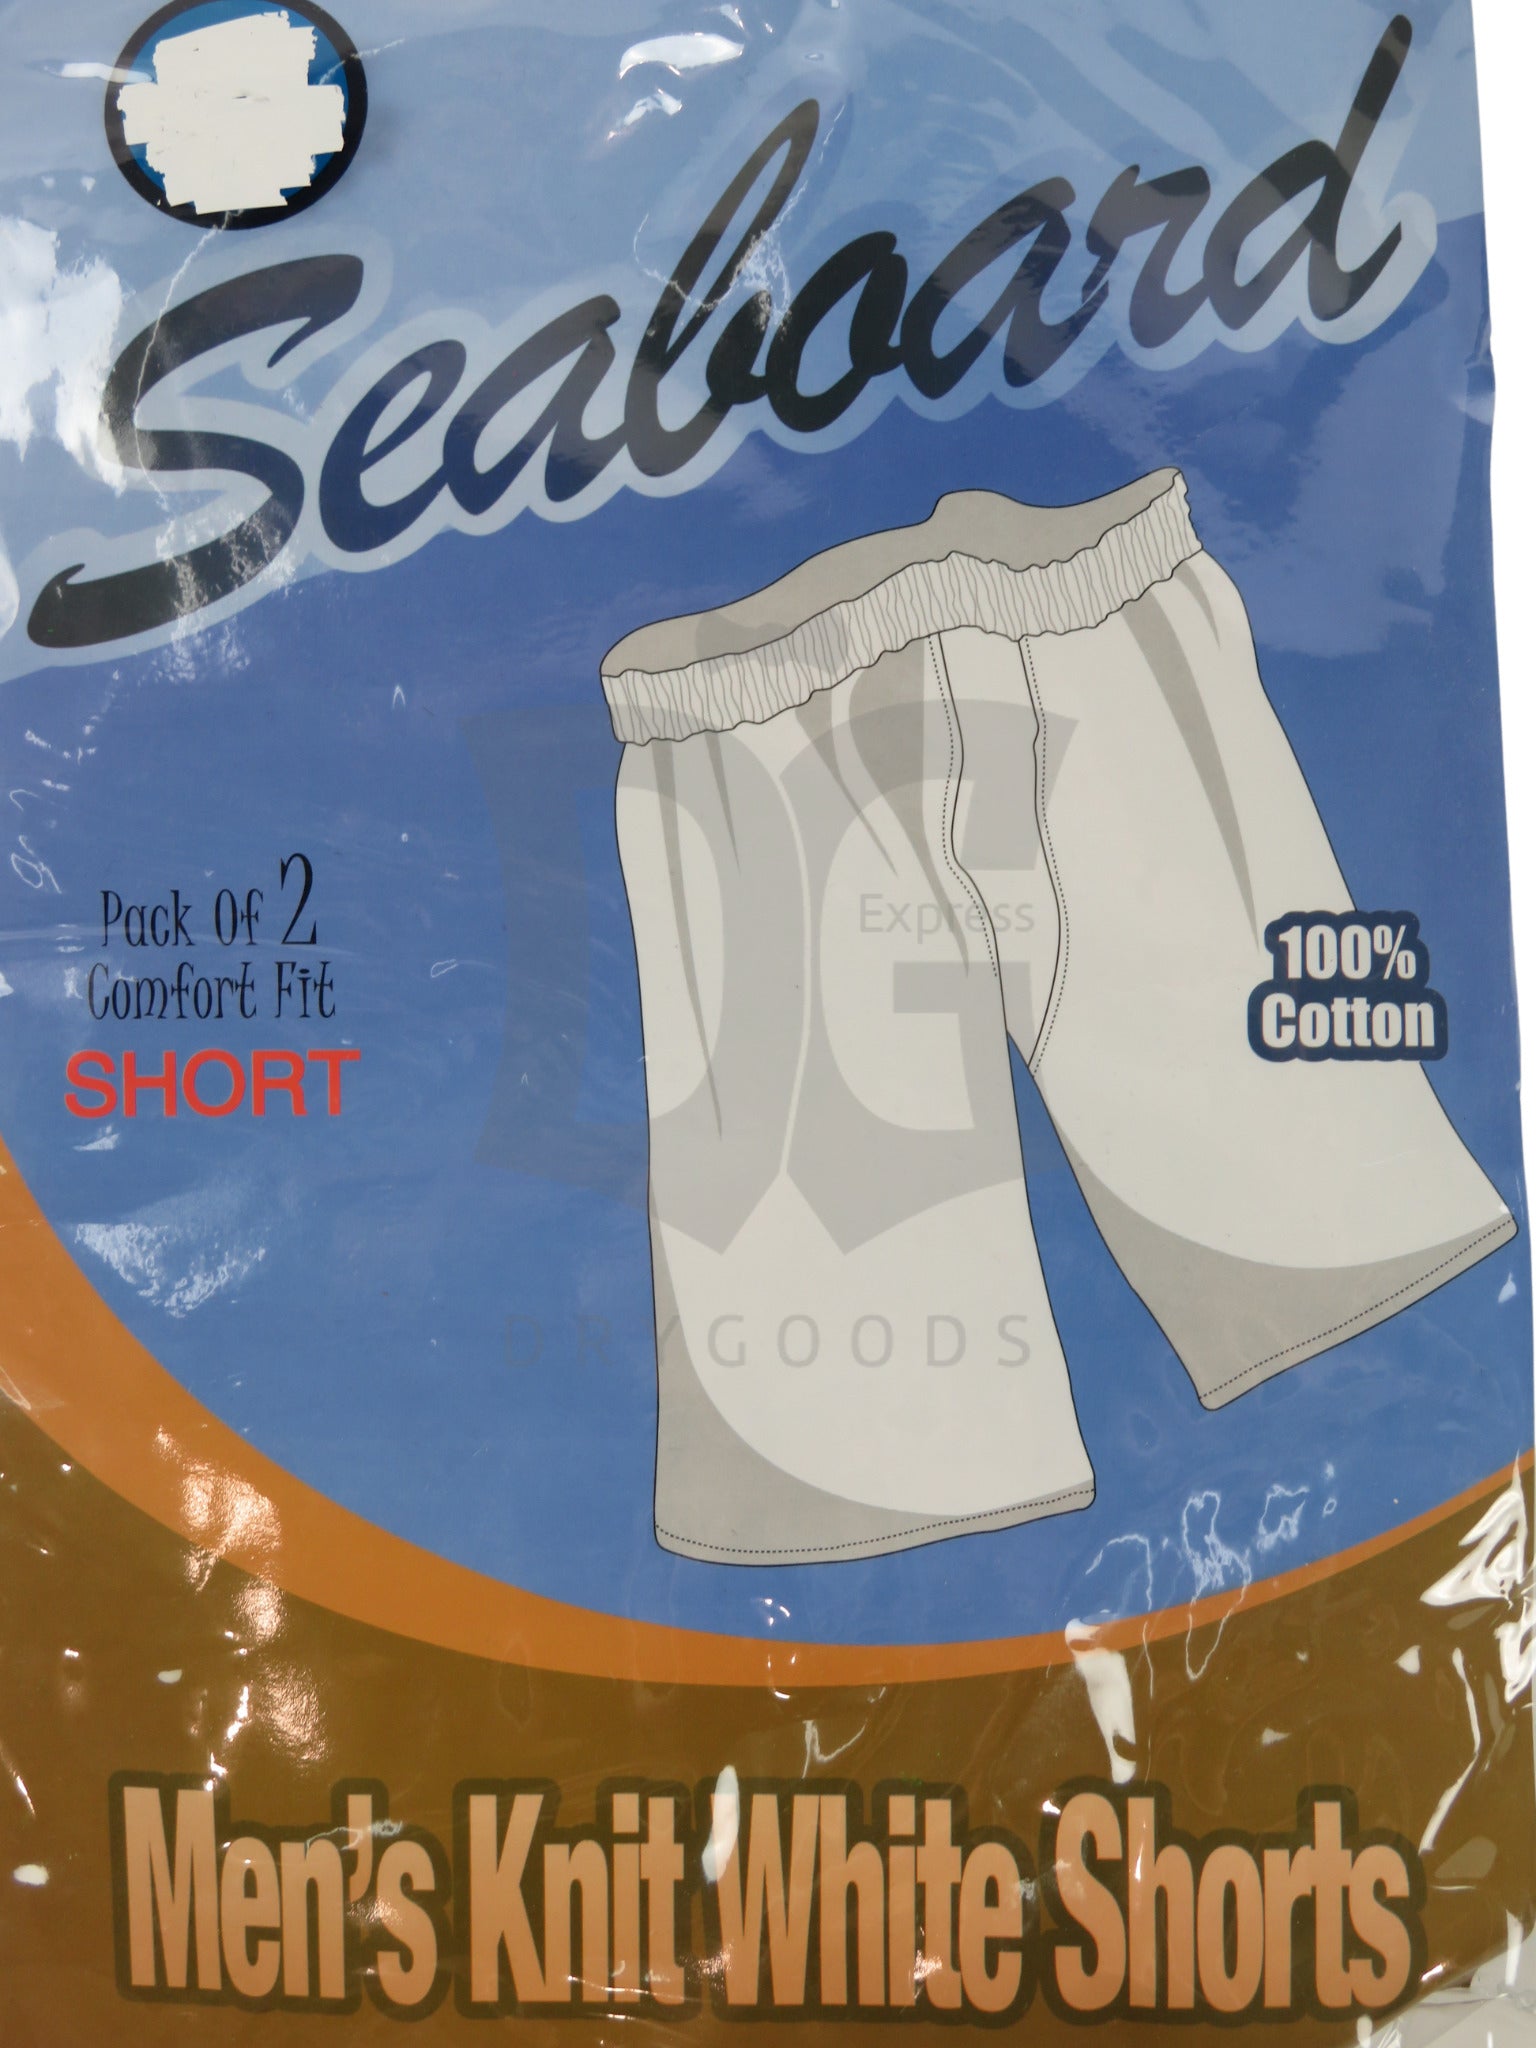 Seaboard Mens Chasidish Knit Boxers